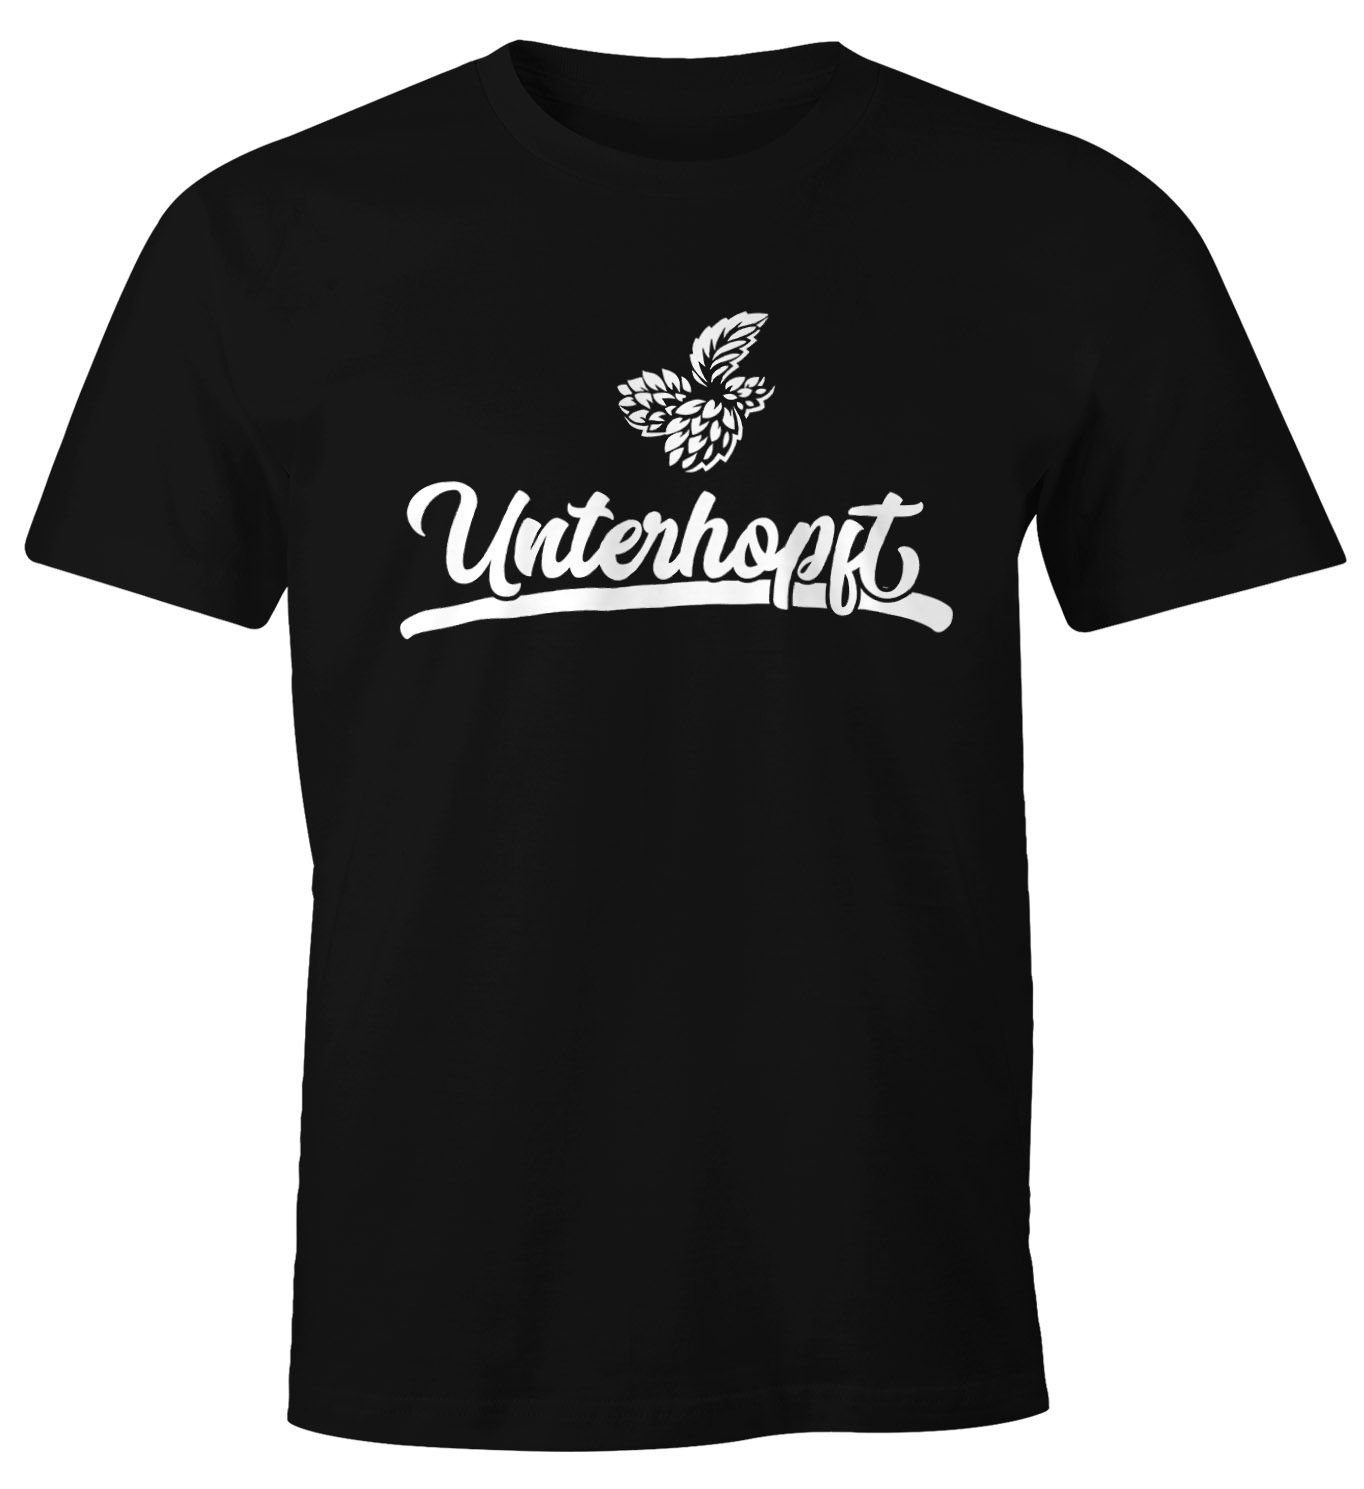 MoonWorks Print-Shirt Herren Party T-Shirt Unterhopft Bier Fun-Shirt Moonworks® mit Print schwarz | T-Shirts